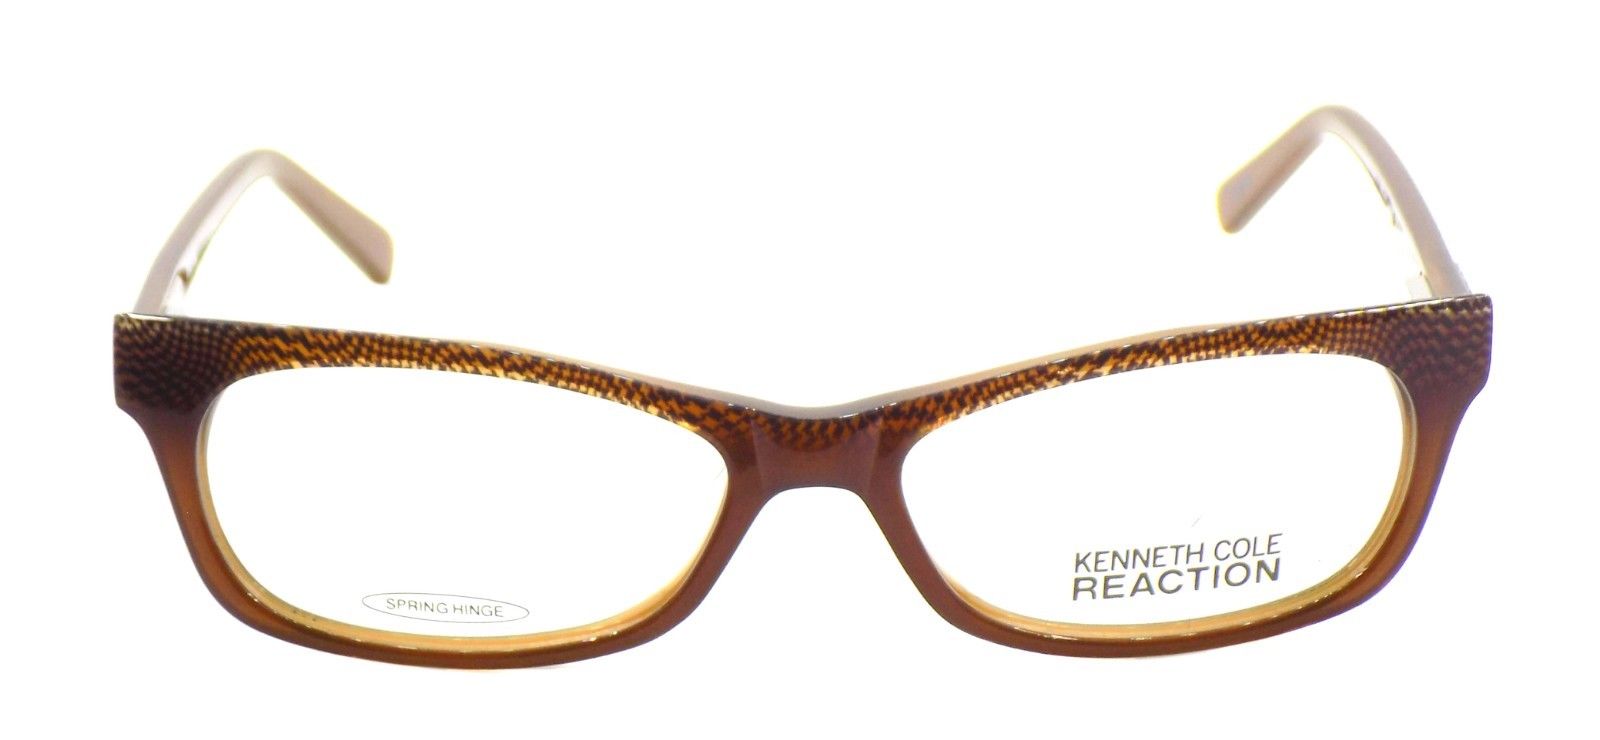 2-Kenneth Cole REACTION KC746 050 Women's Eyeglasses Frames 53-15-135 Brown + CASE-664689599448-IKSpecs